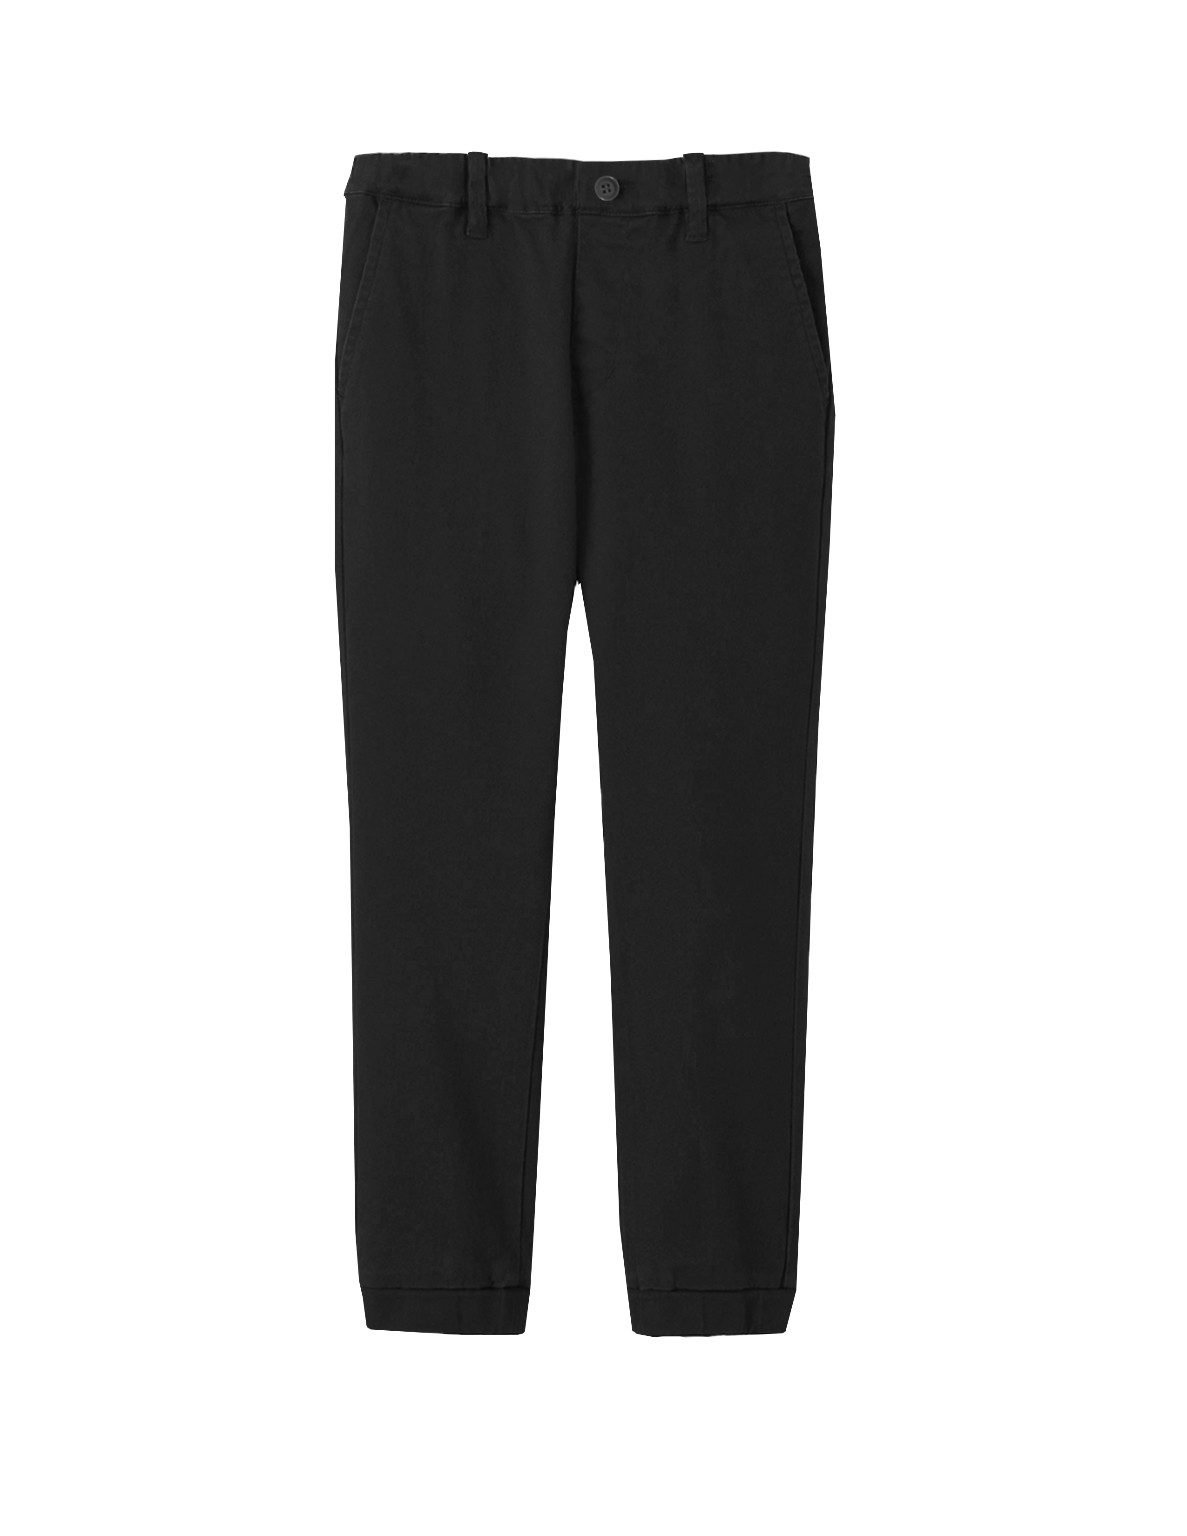 Wholesale Womens Joggers School Uniform Pants in Black